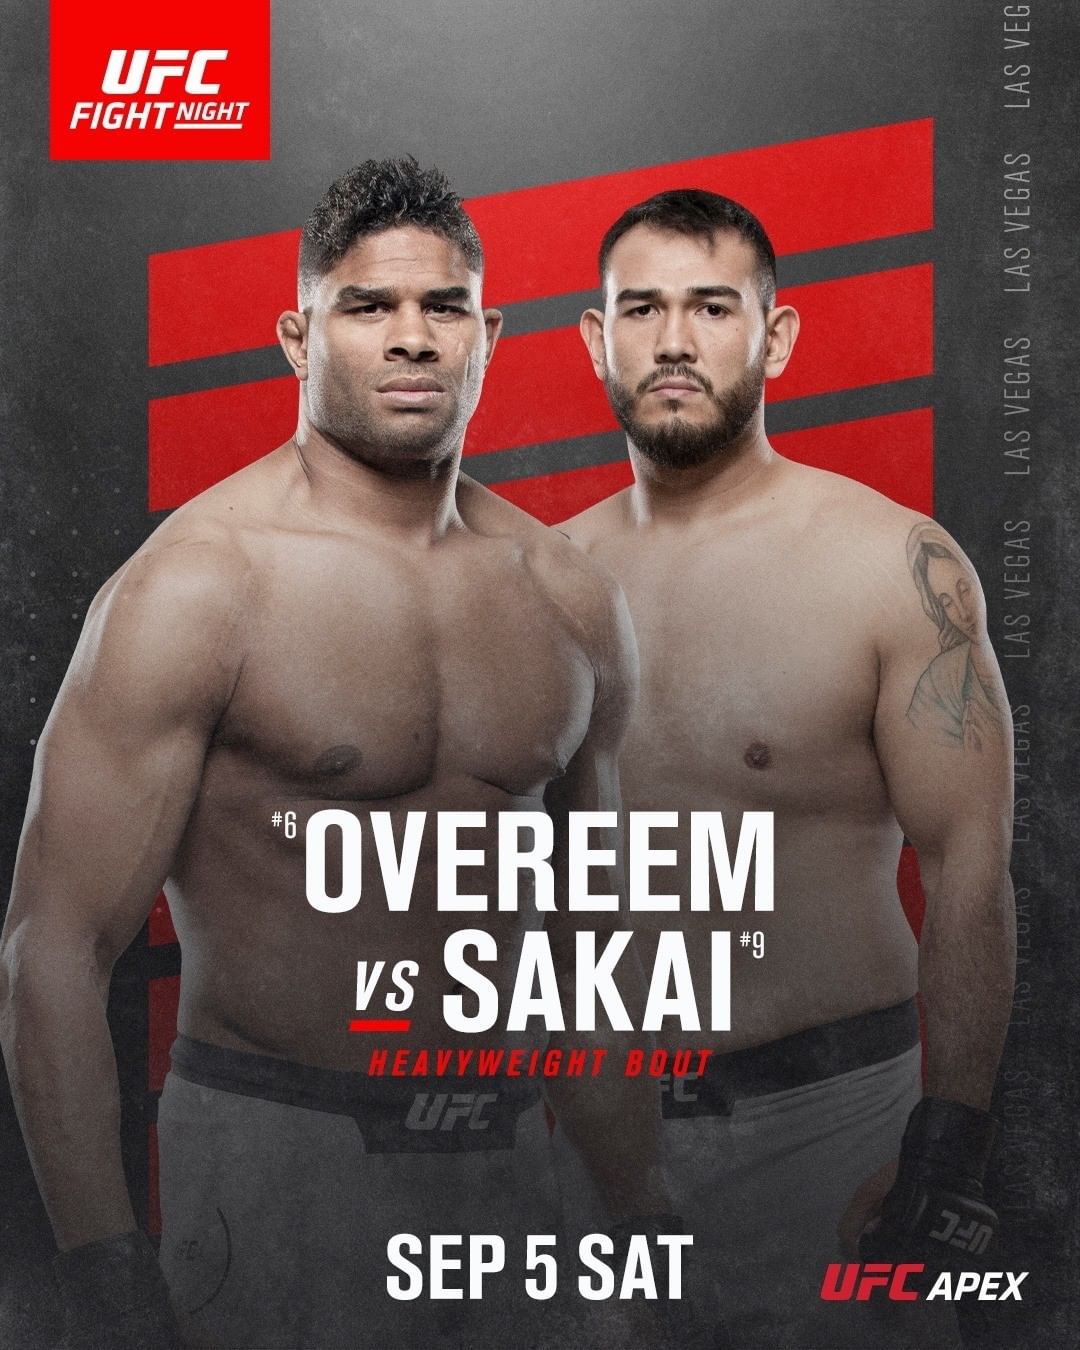 UFC Fight Night 176 Results - Who Won at Overeem vs. Sakai